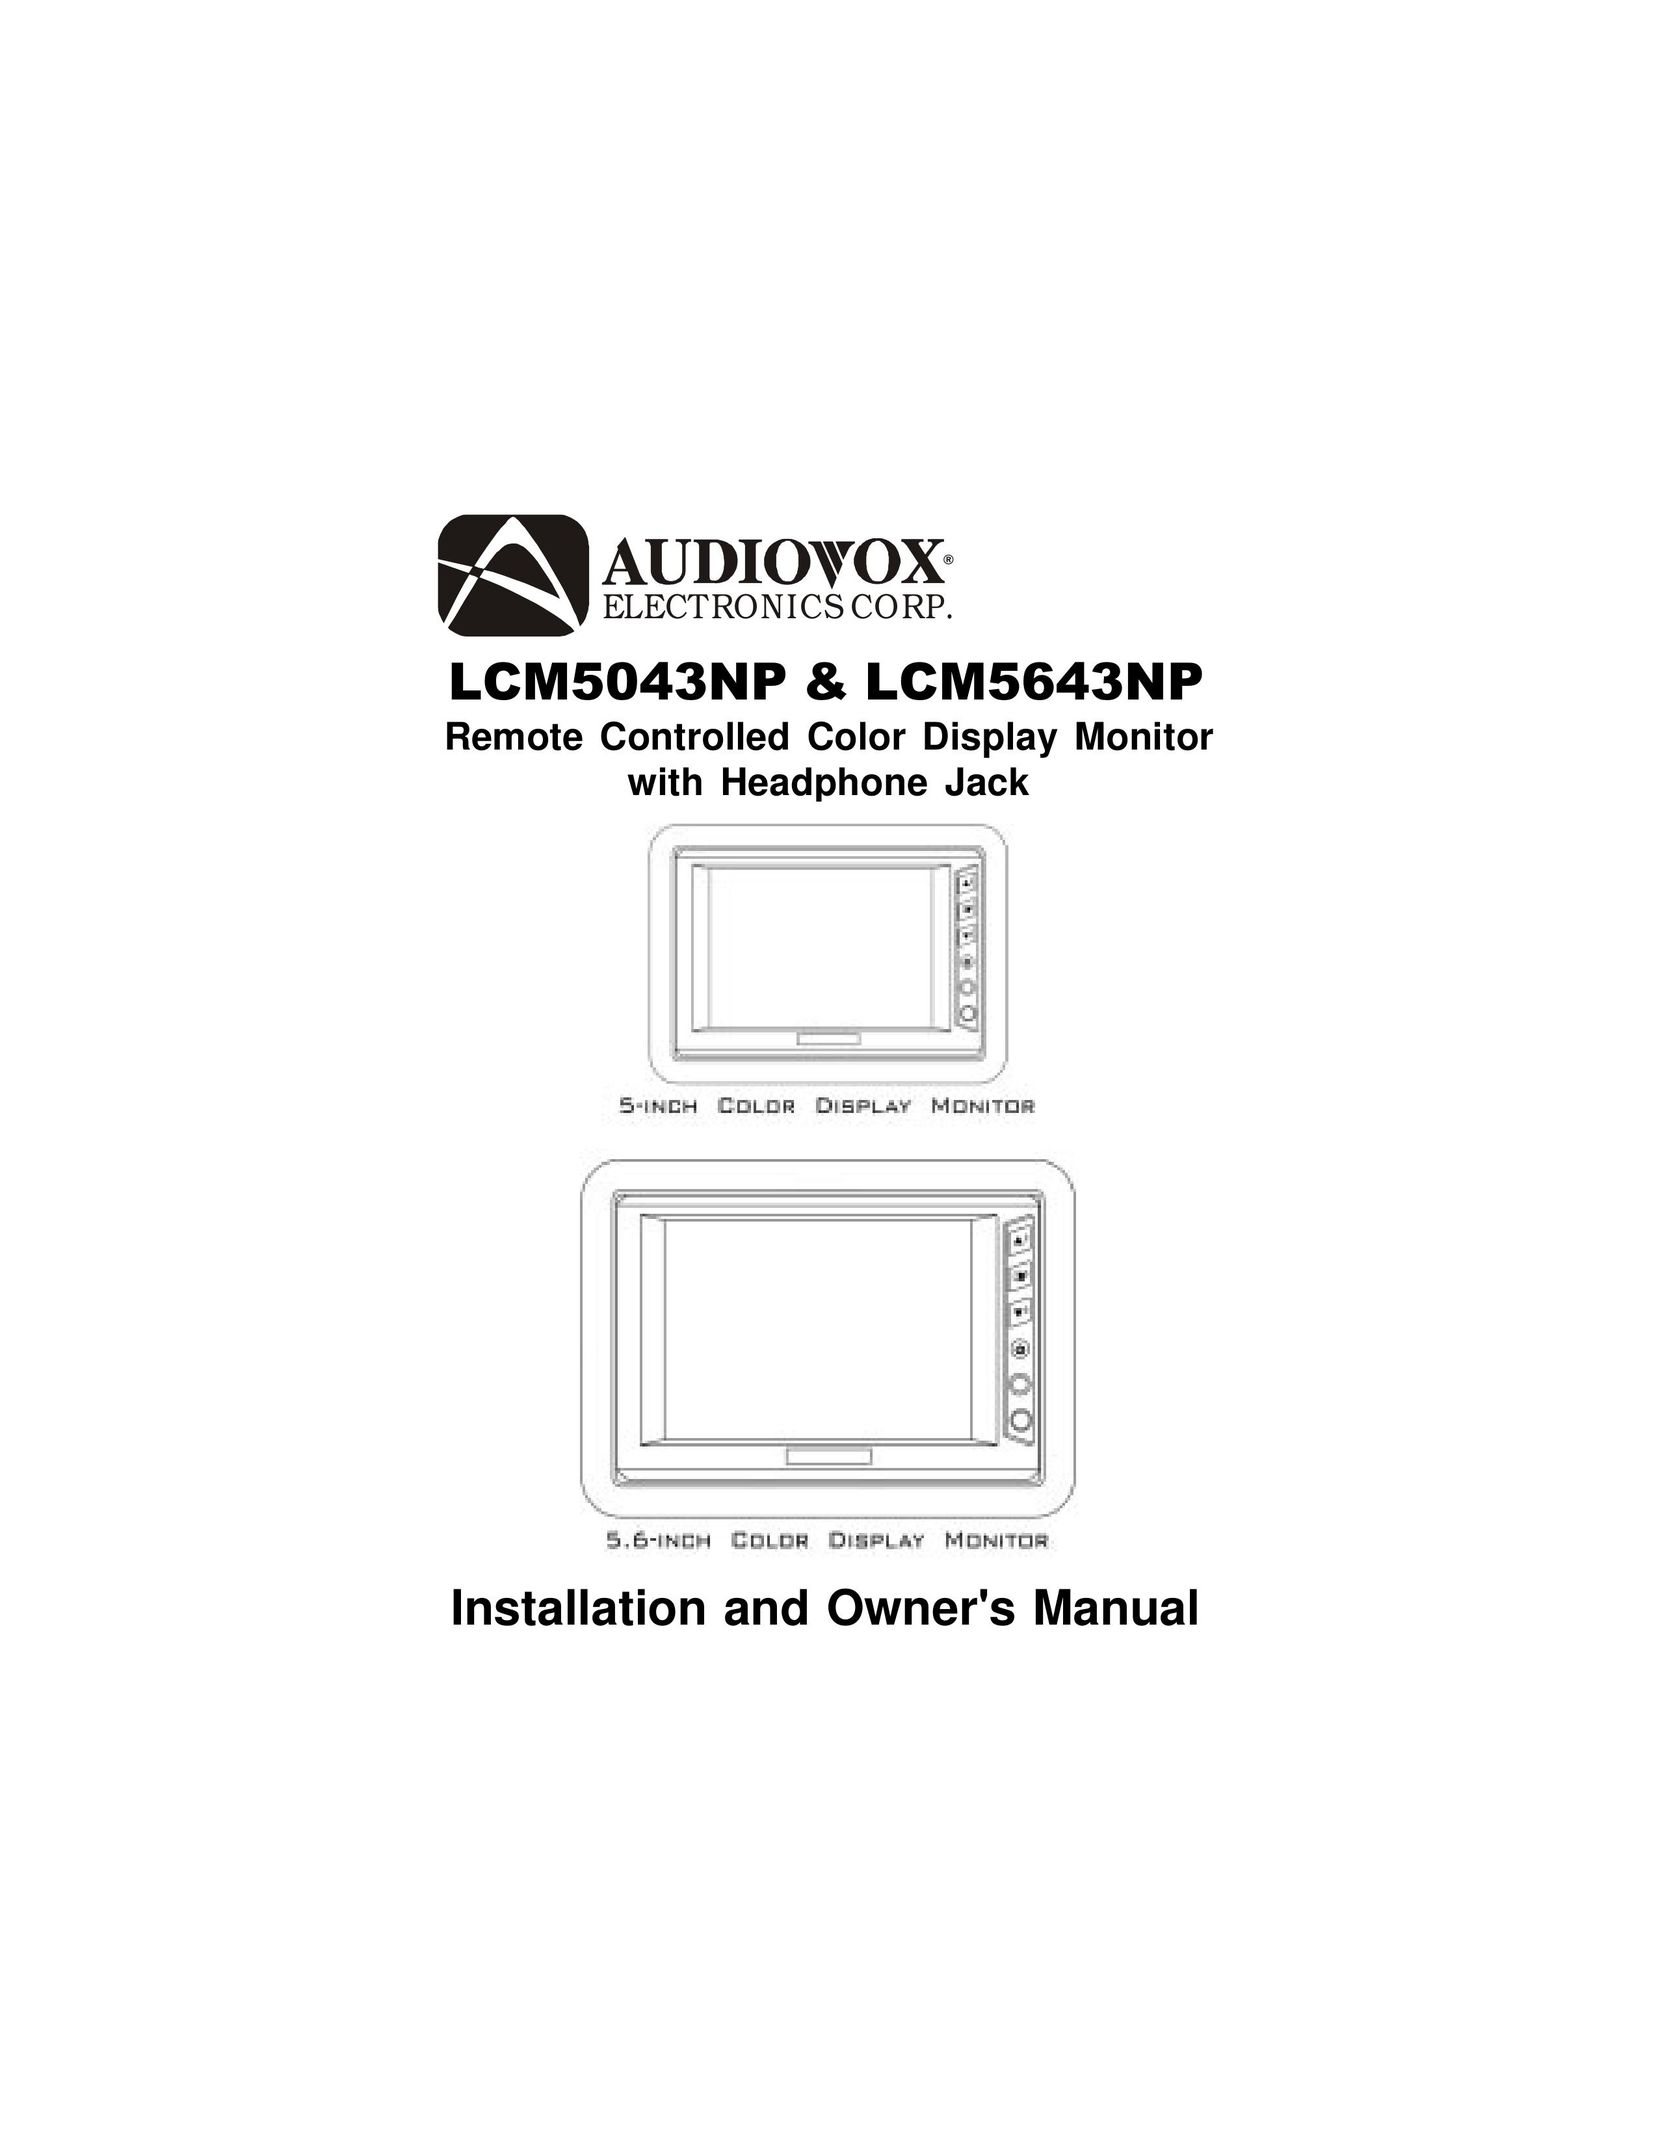 Audiovox LCM5643NP Computer Monitor User Manual